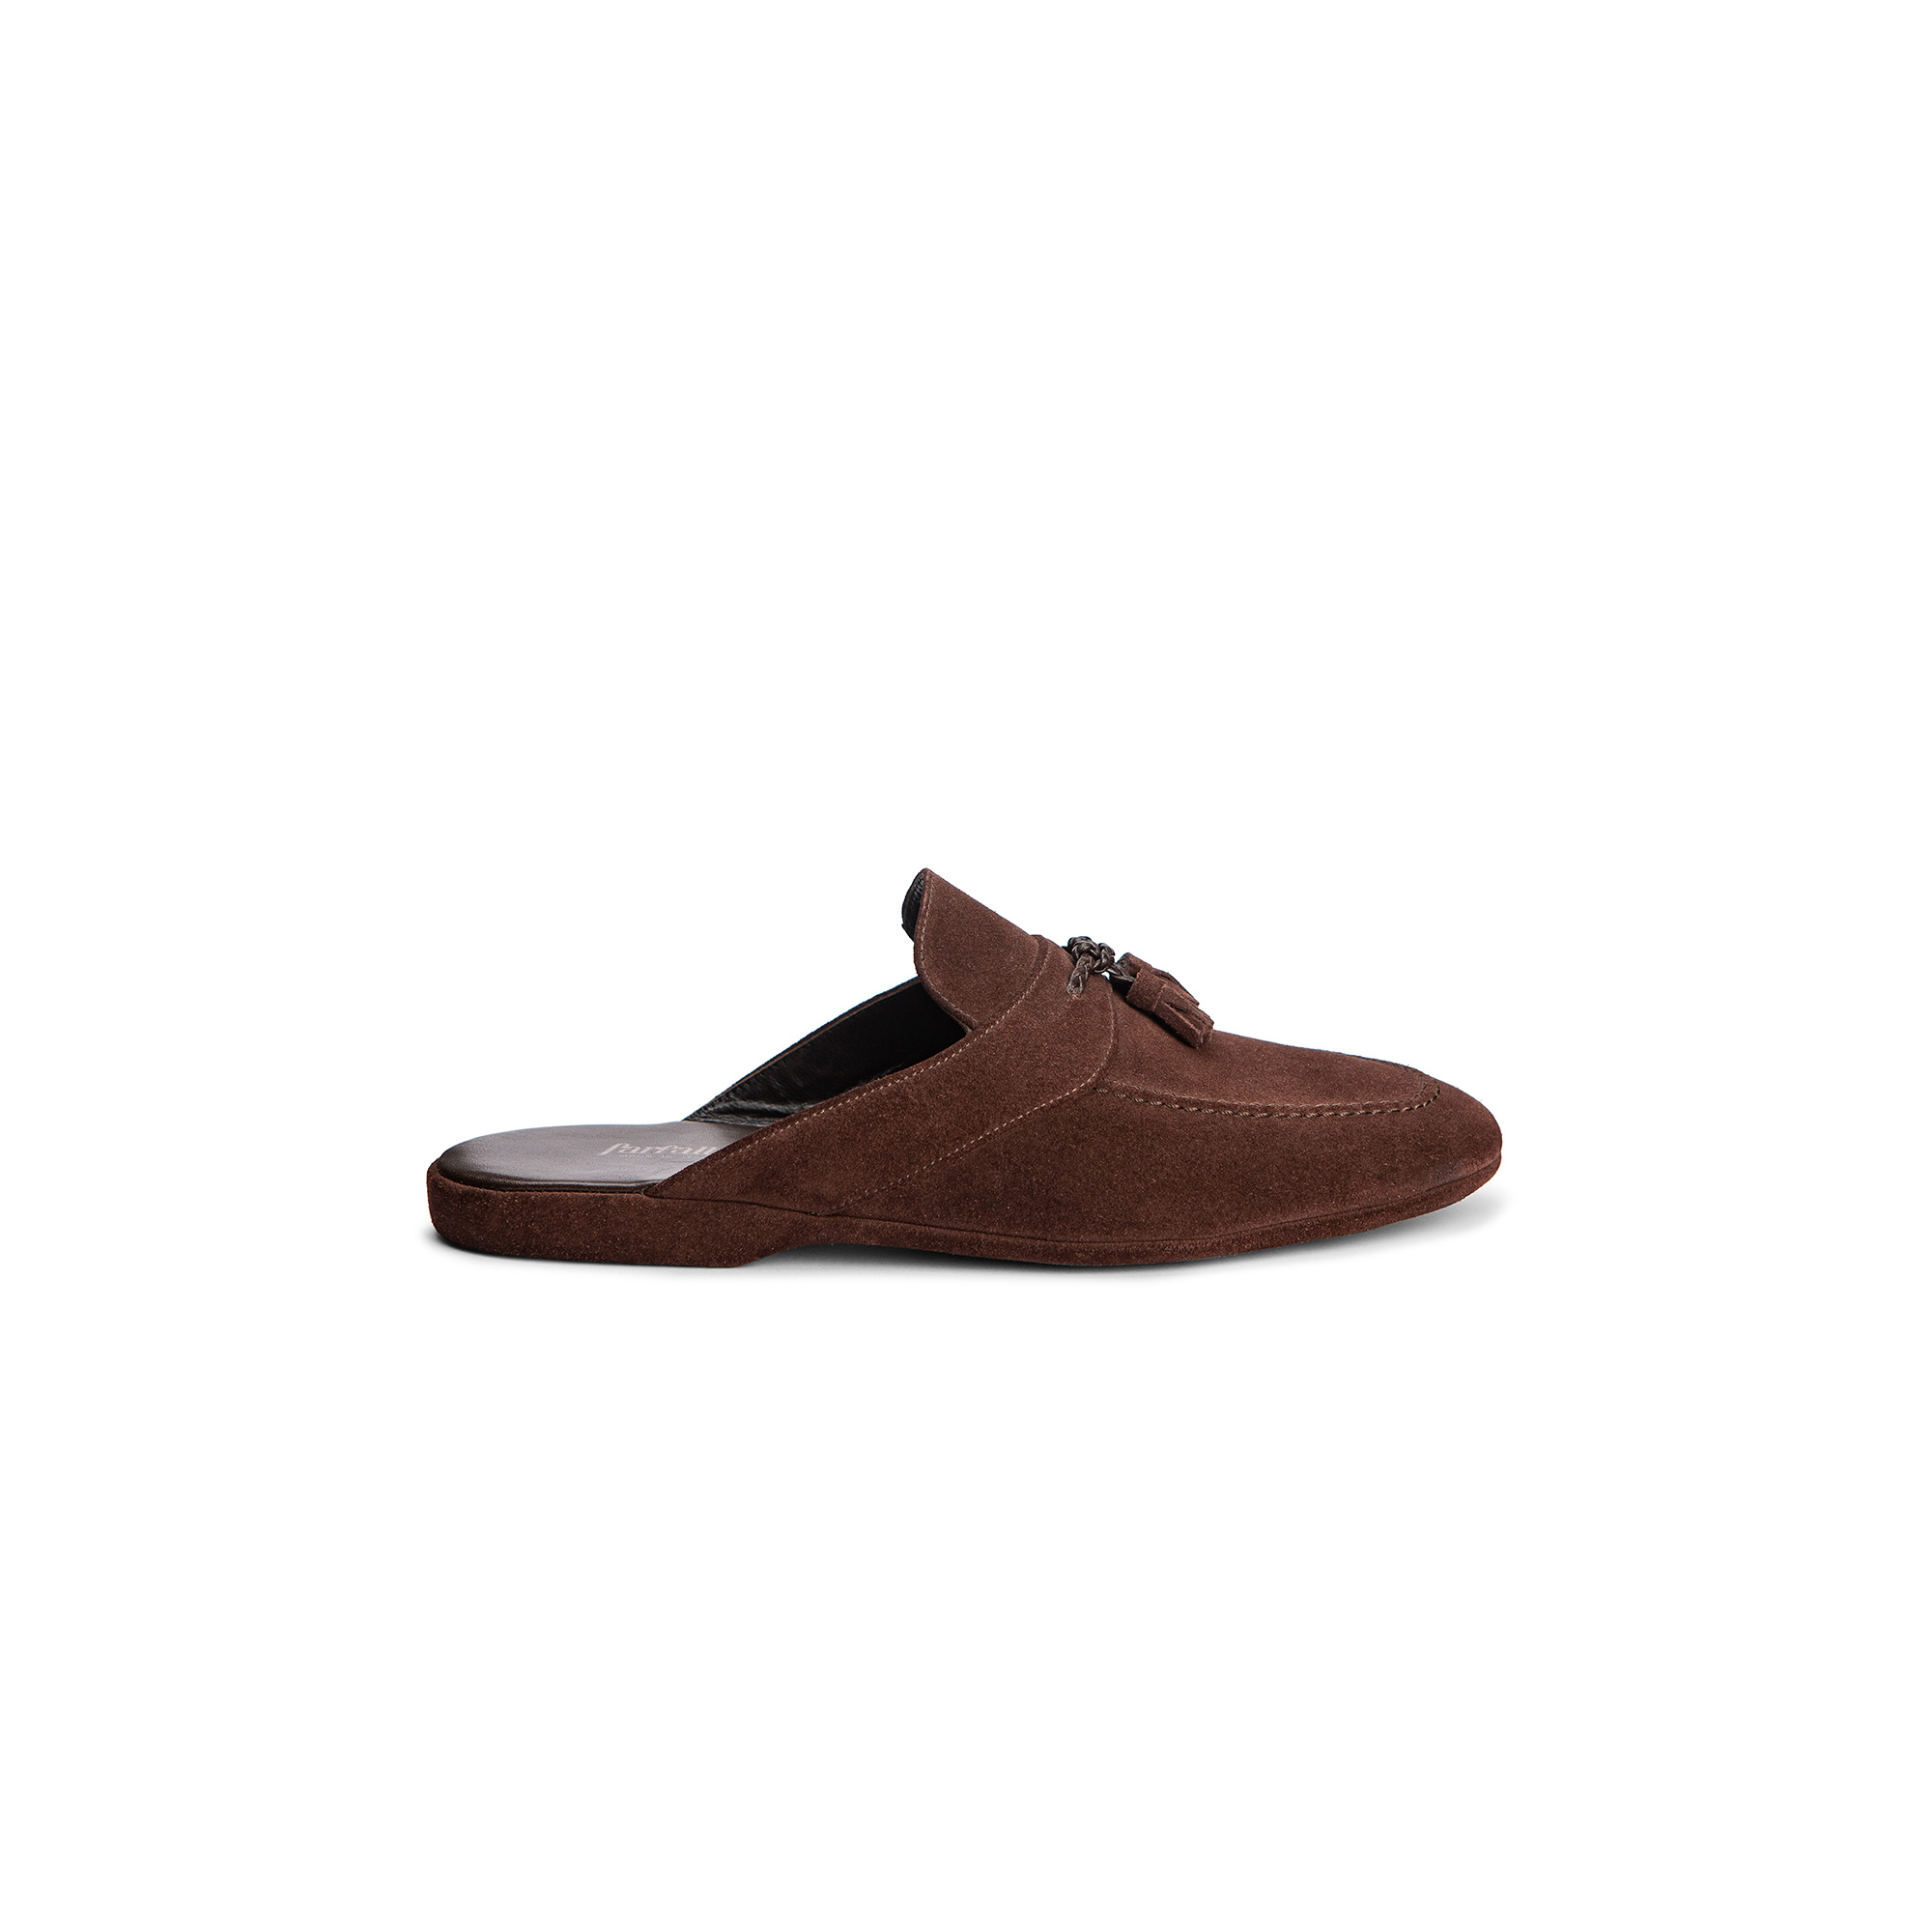 Pantofola aperta interno velour ebano - Farfalla italian slippers